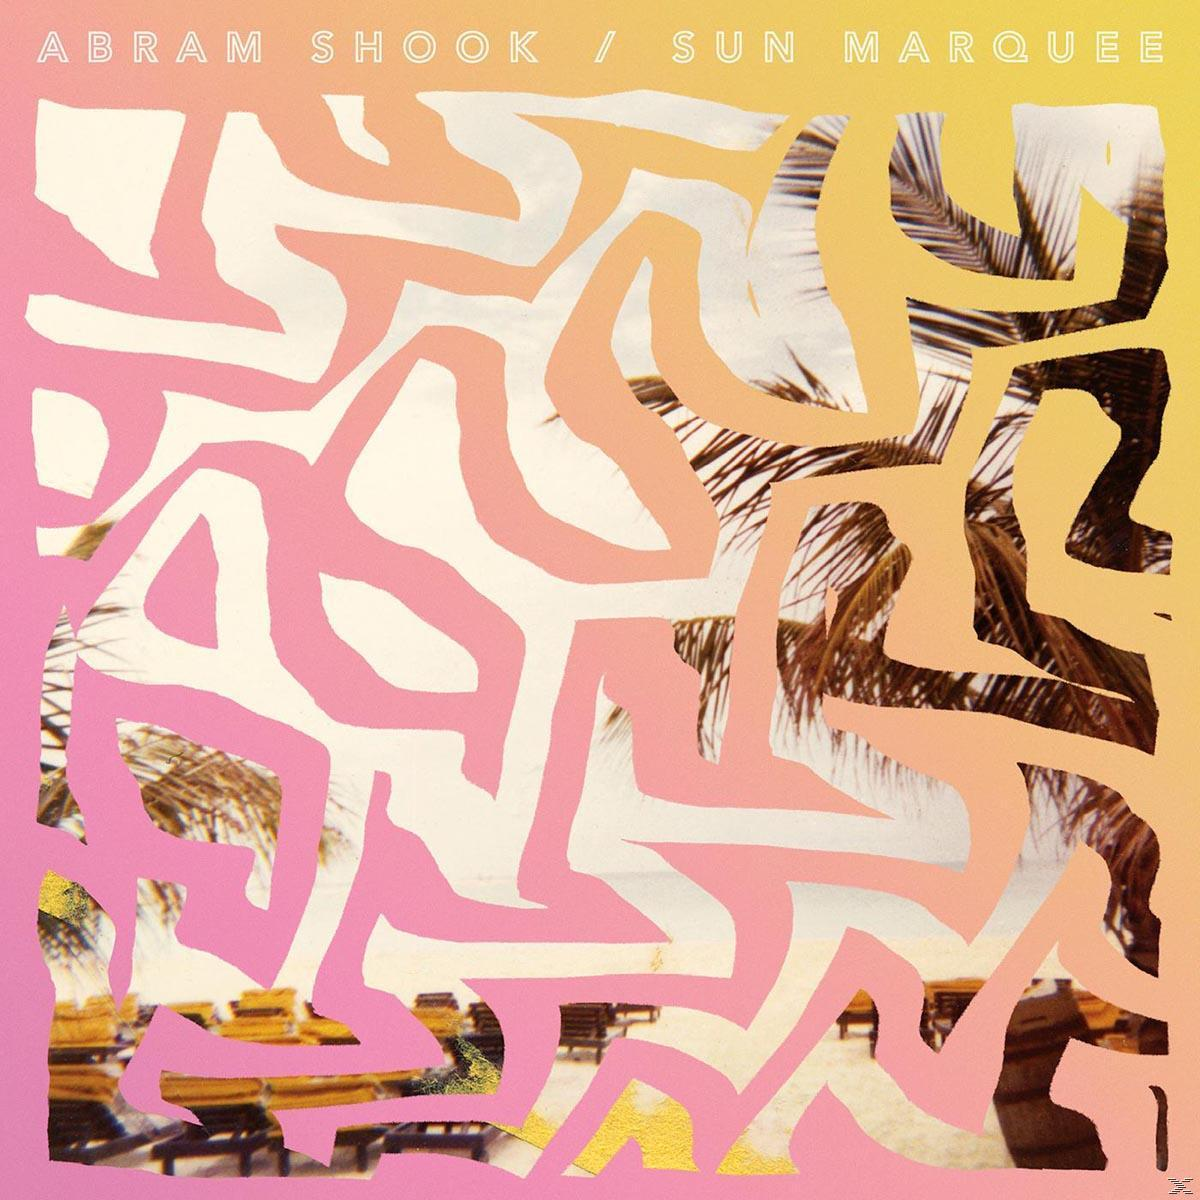 Abram Shook - Sun (CD) - Marquee